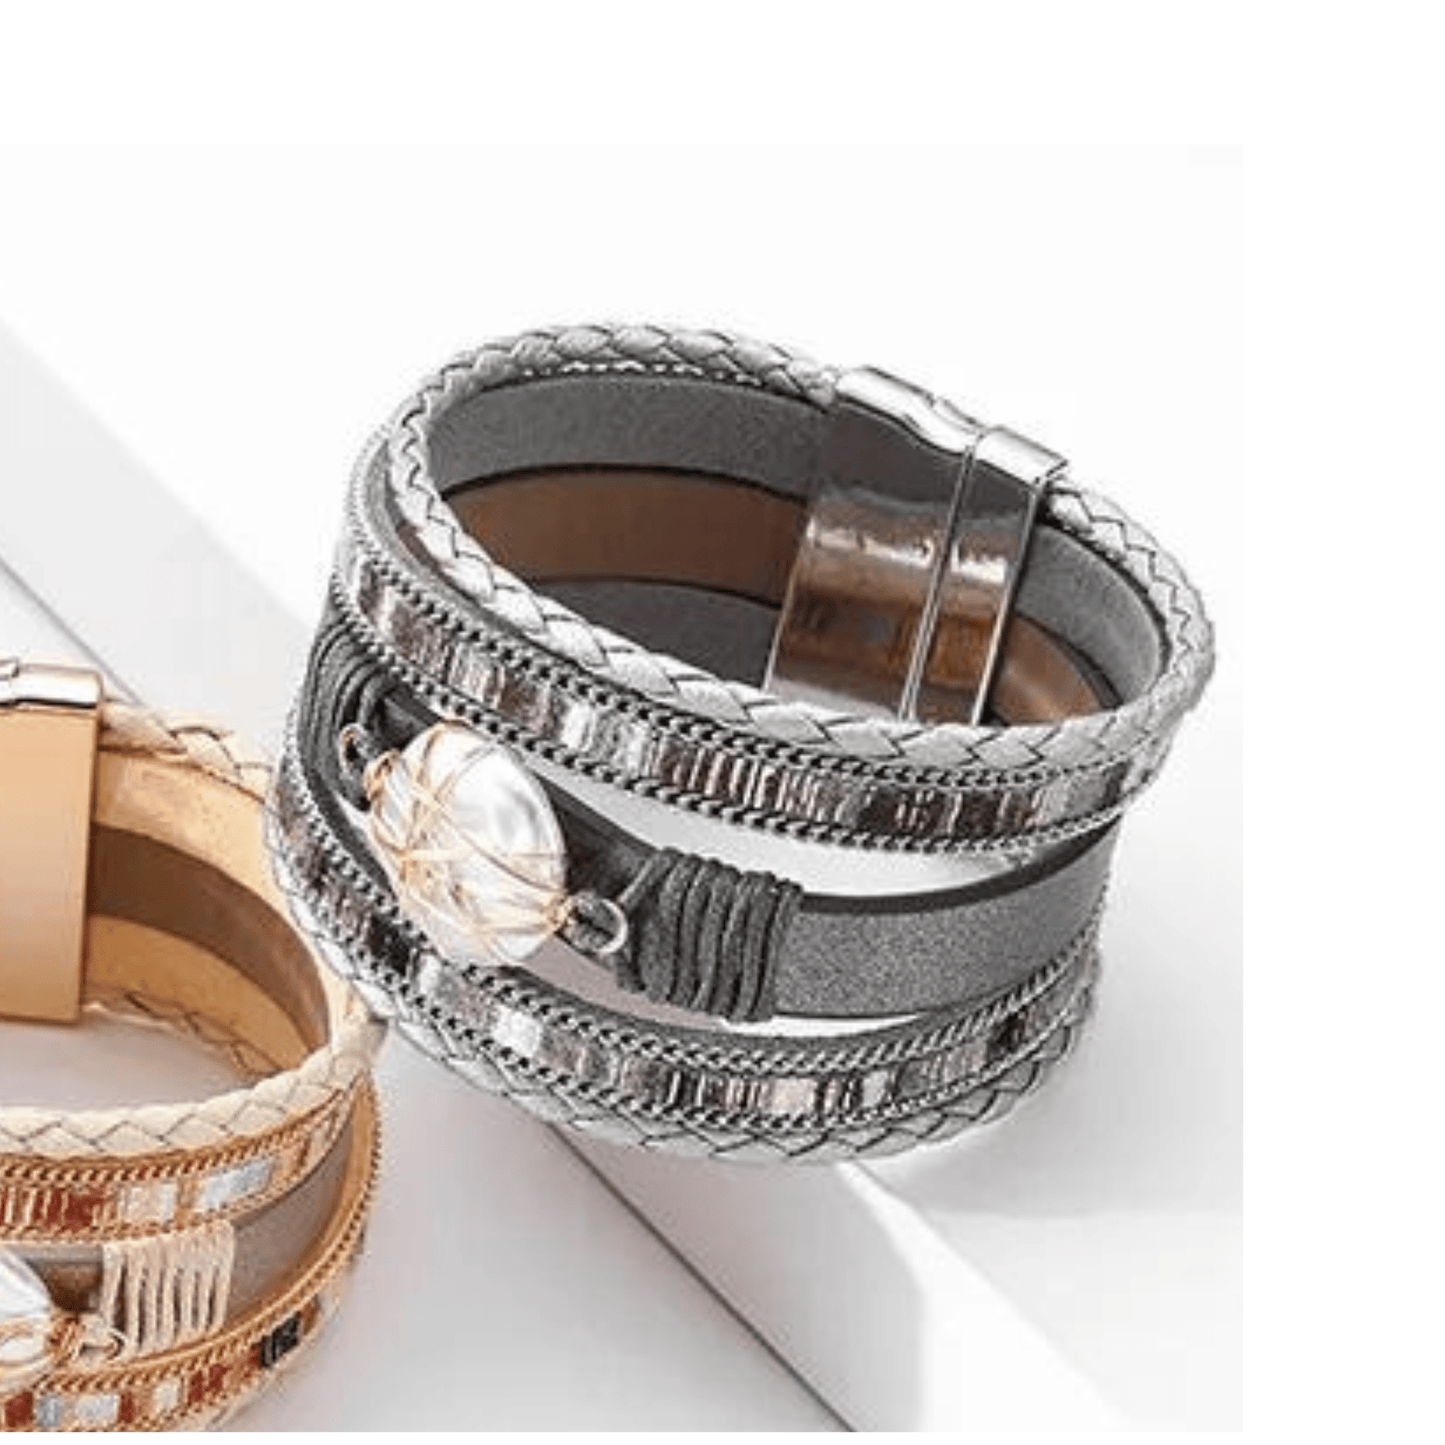 Bracelet Bracelet -  PU Leather Stone/Pearl Bracelet With Magnetic Closure - Grey NI-NHBD325928